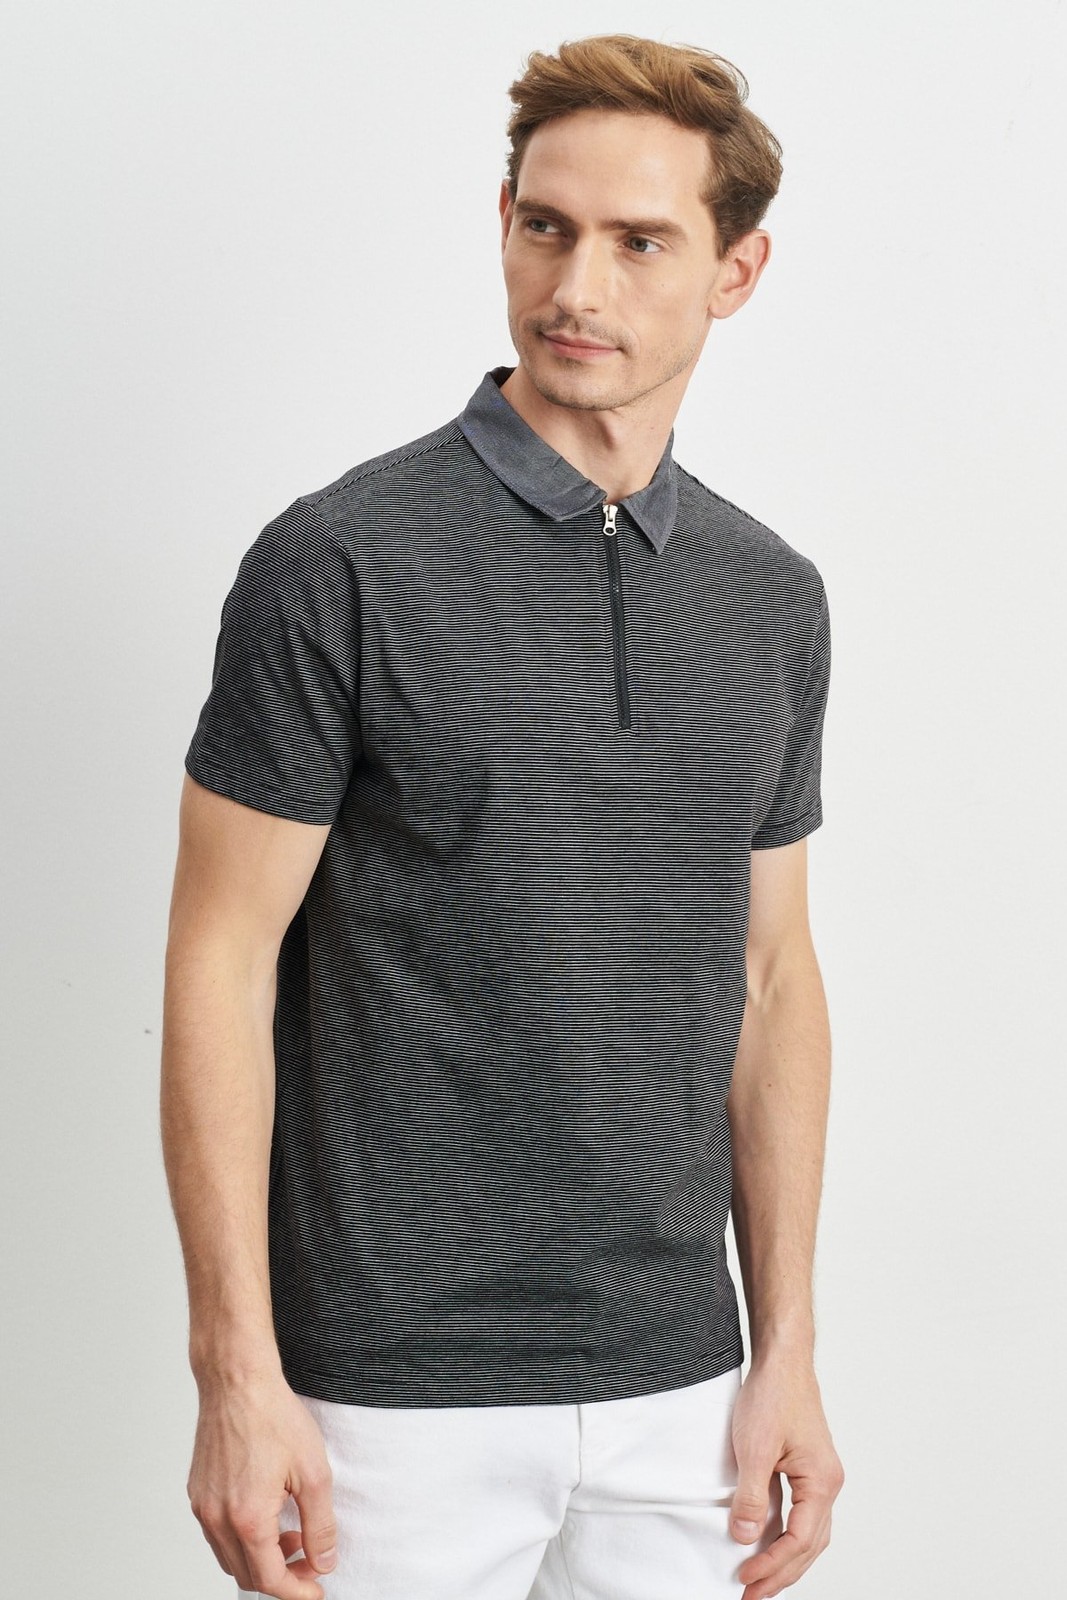 ALTINYILDIZ CLASSICS Men's Black and white Slim Fit Slim Fit Zippered Polo Neck Cotton T-Shirt.